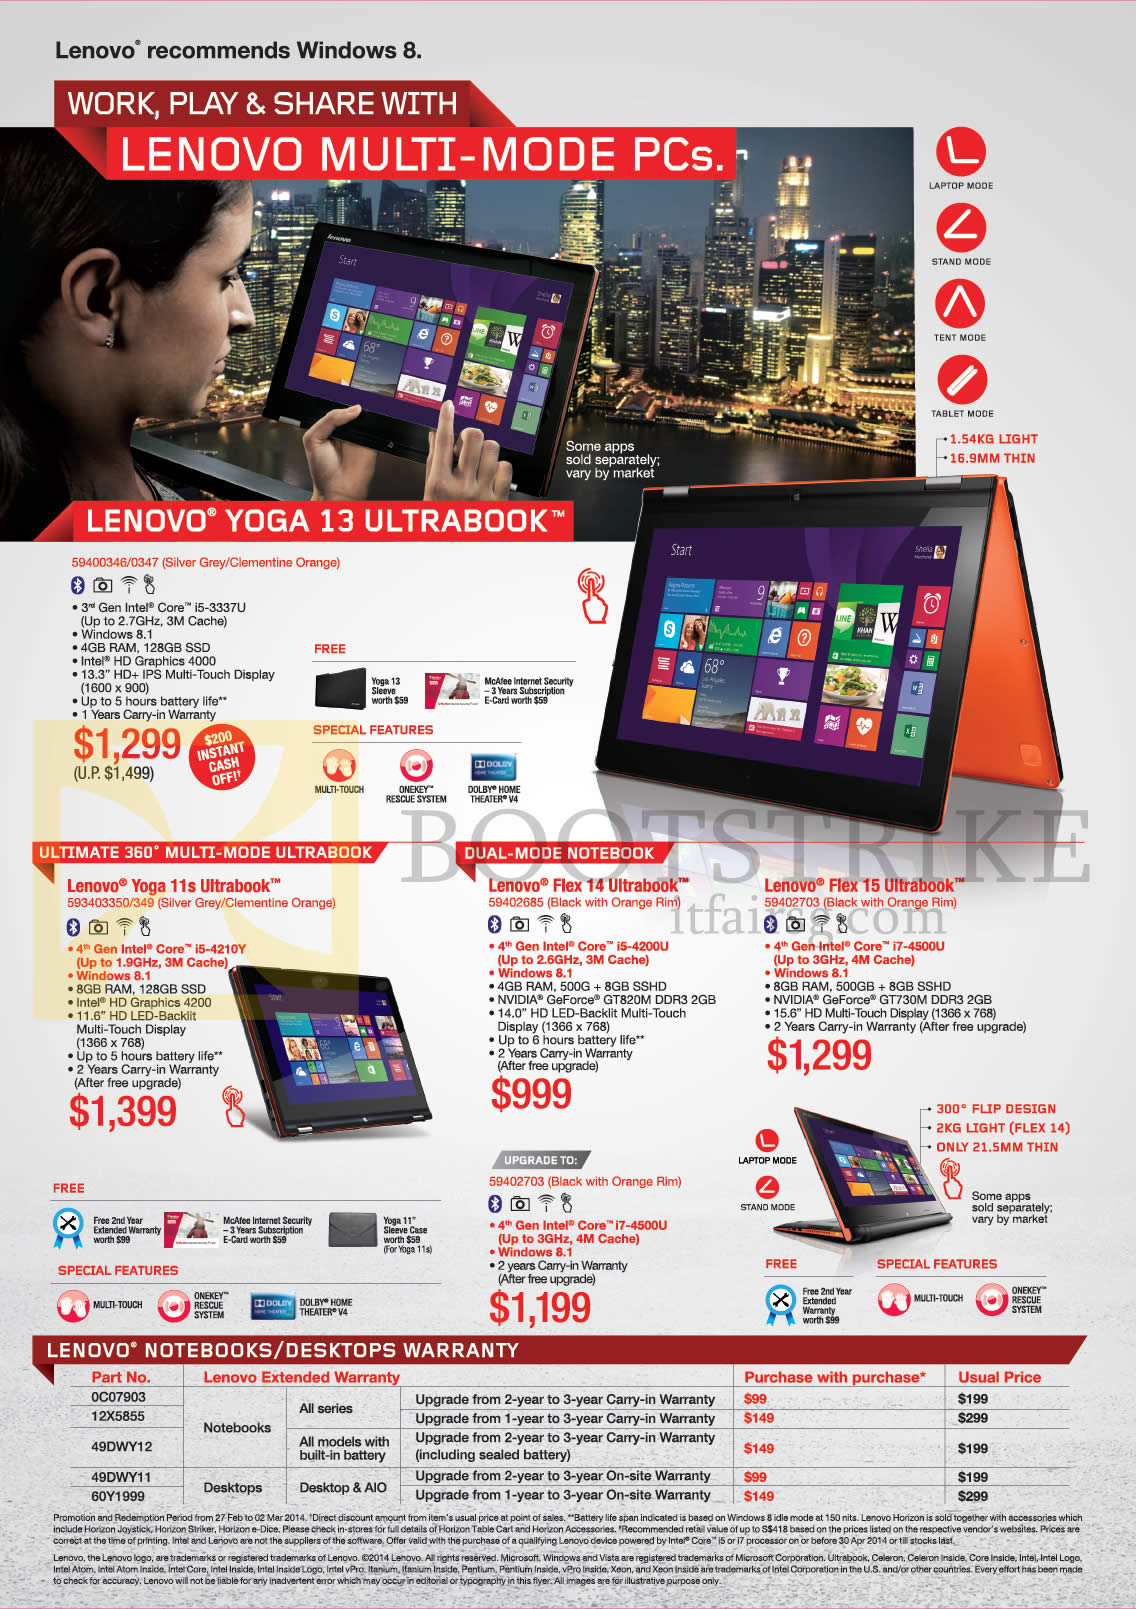 IT SHOW 2014 price list image brochure of Lenovo Notebooks Yoga 13, 11s, Flex 14, 15, Extended Warranty